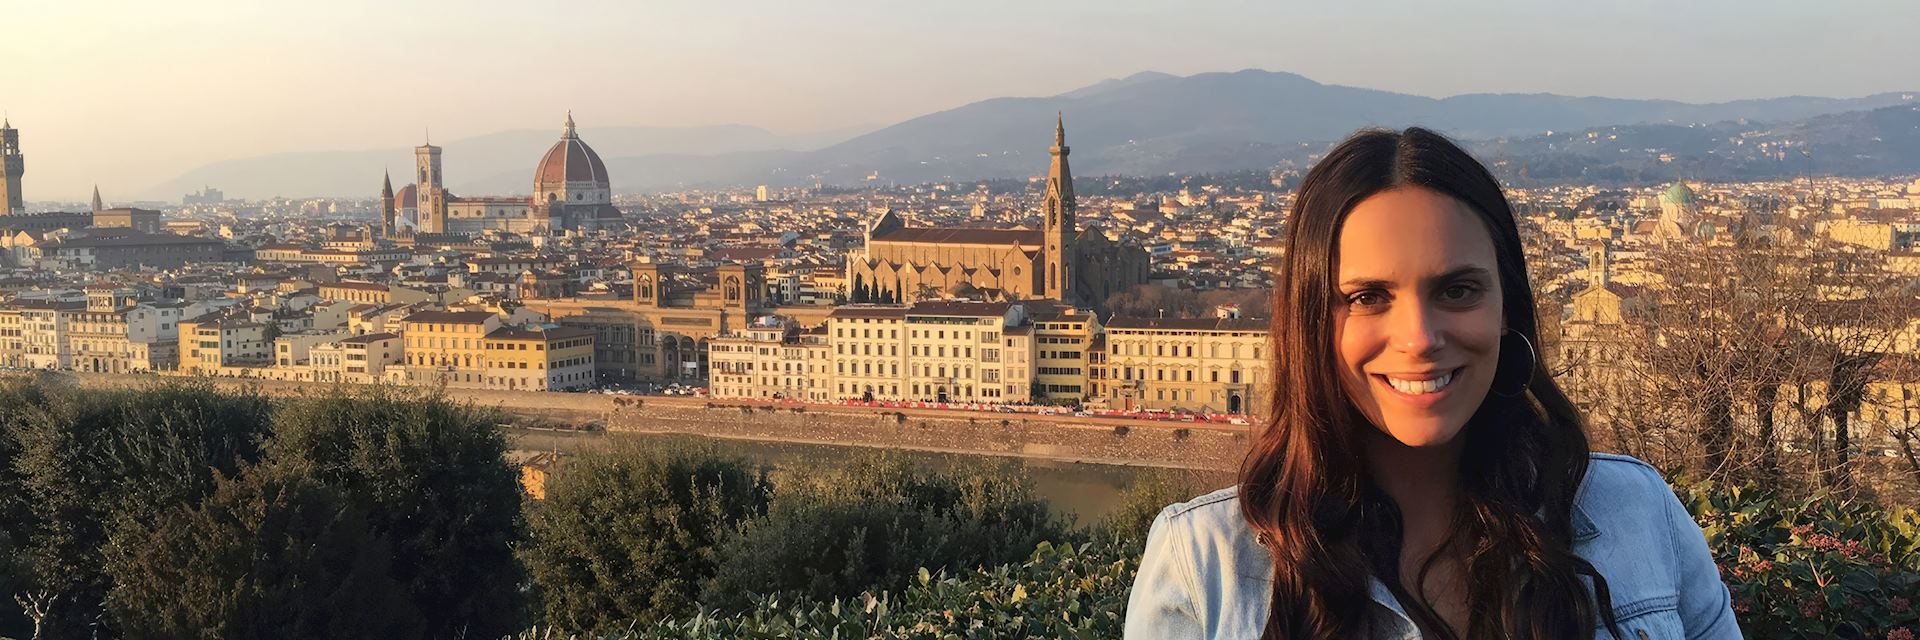 Samantha at Piazza Michelangelo, Florence